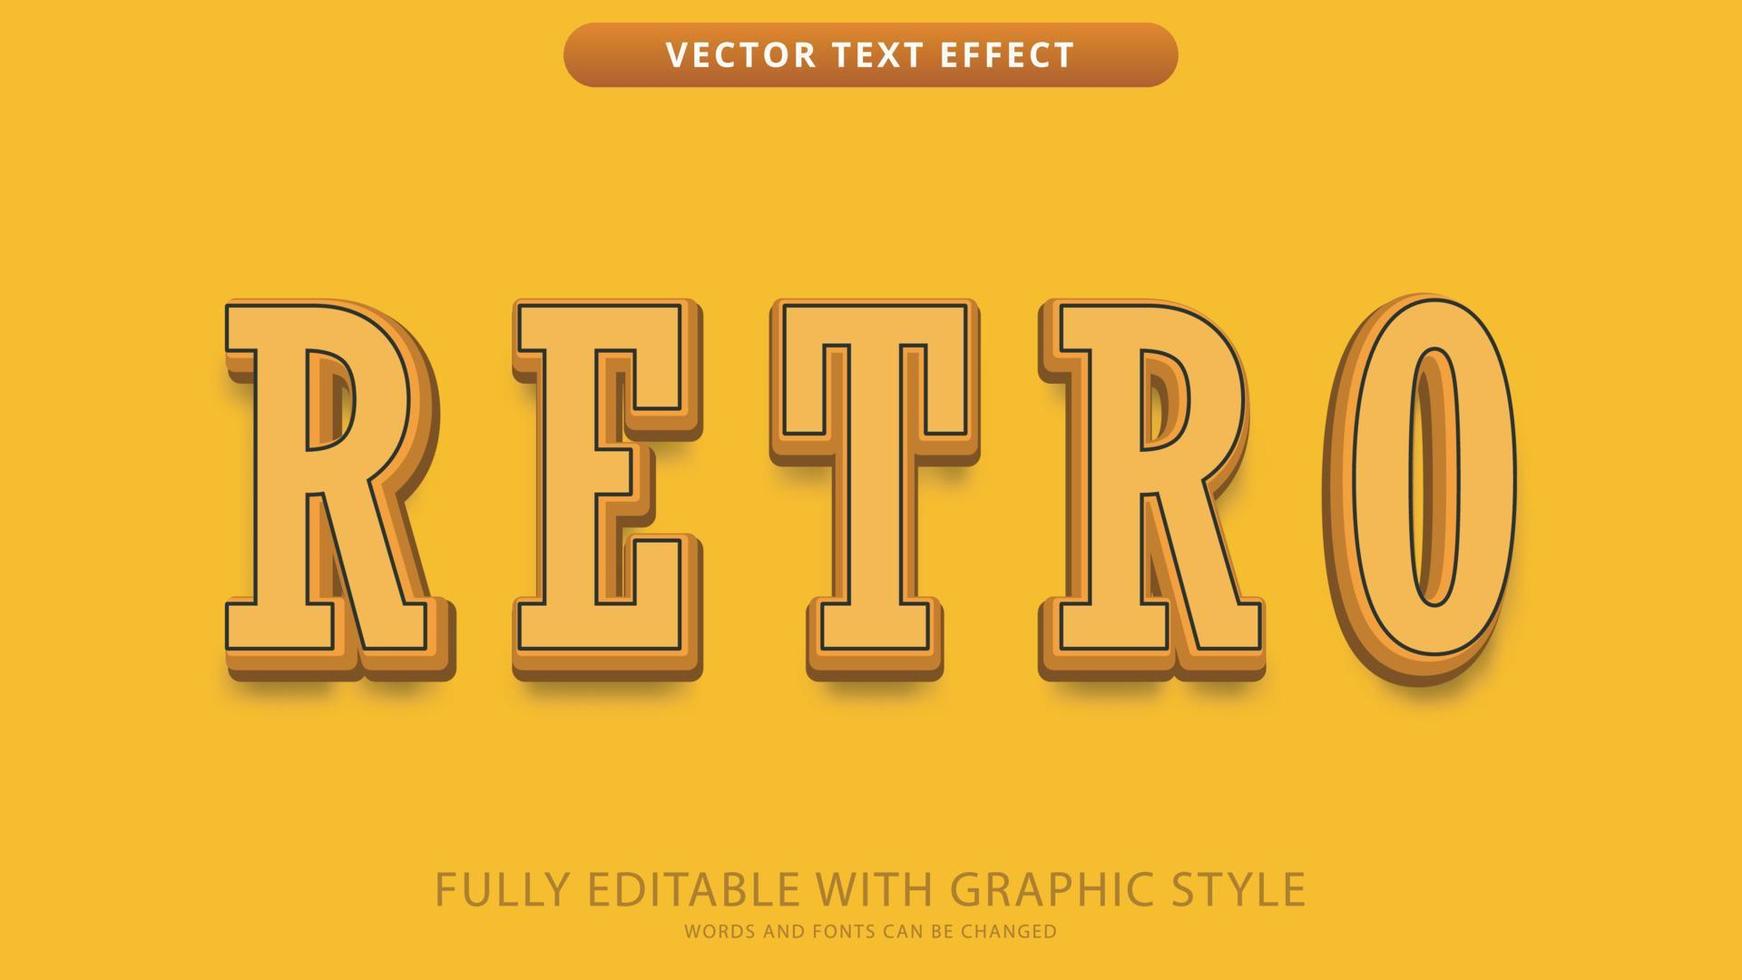 retro texteffekt redigerbar med grafisk stil vektor